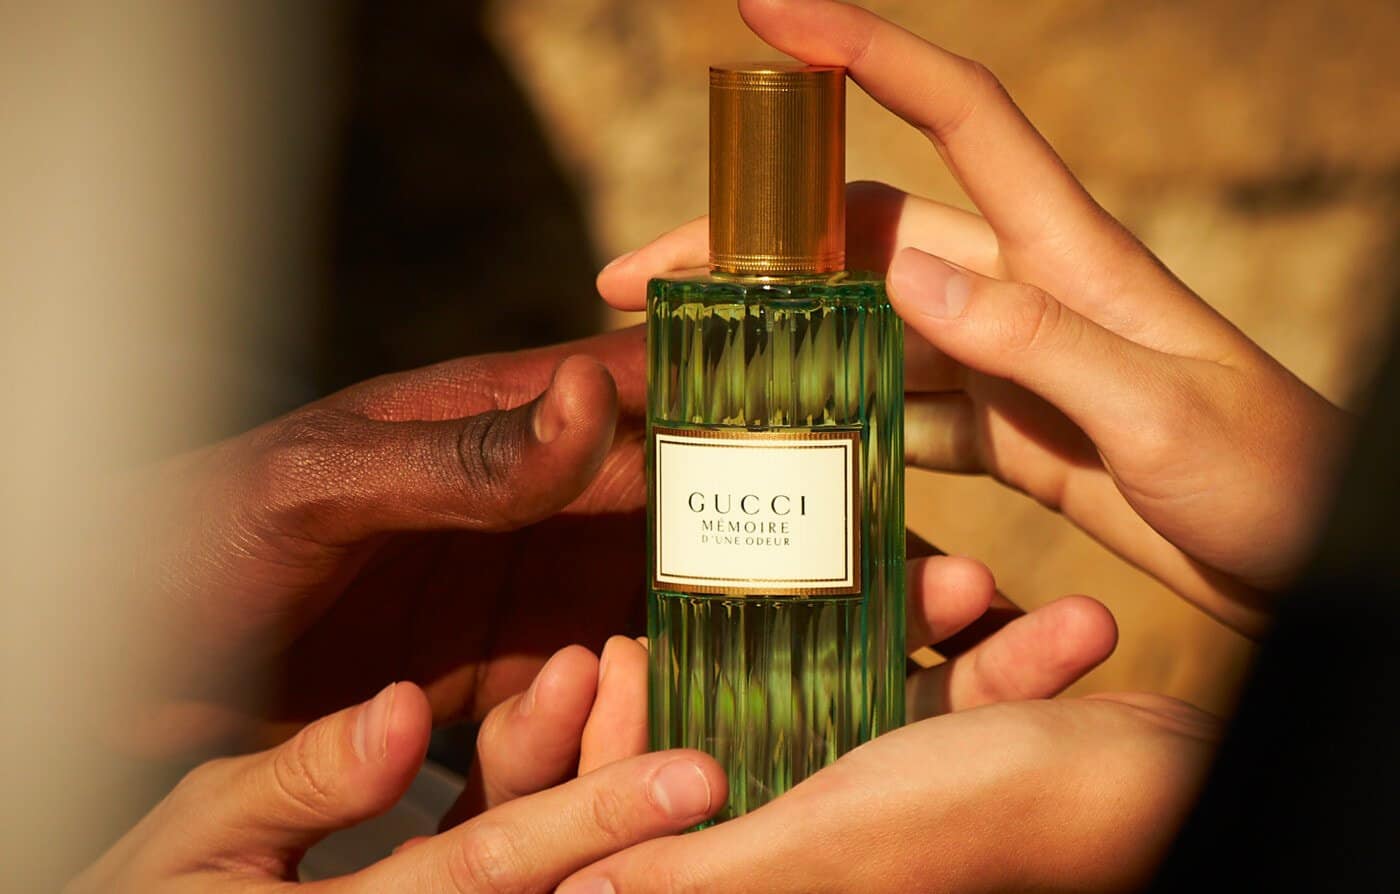 Gucci’s universal fragrance